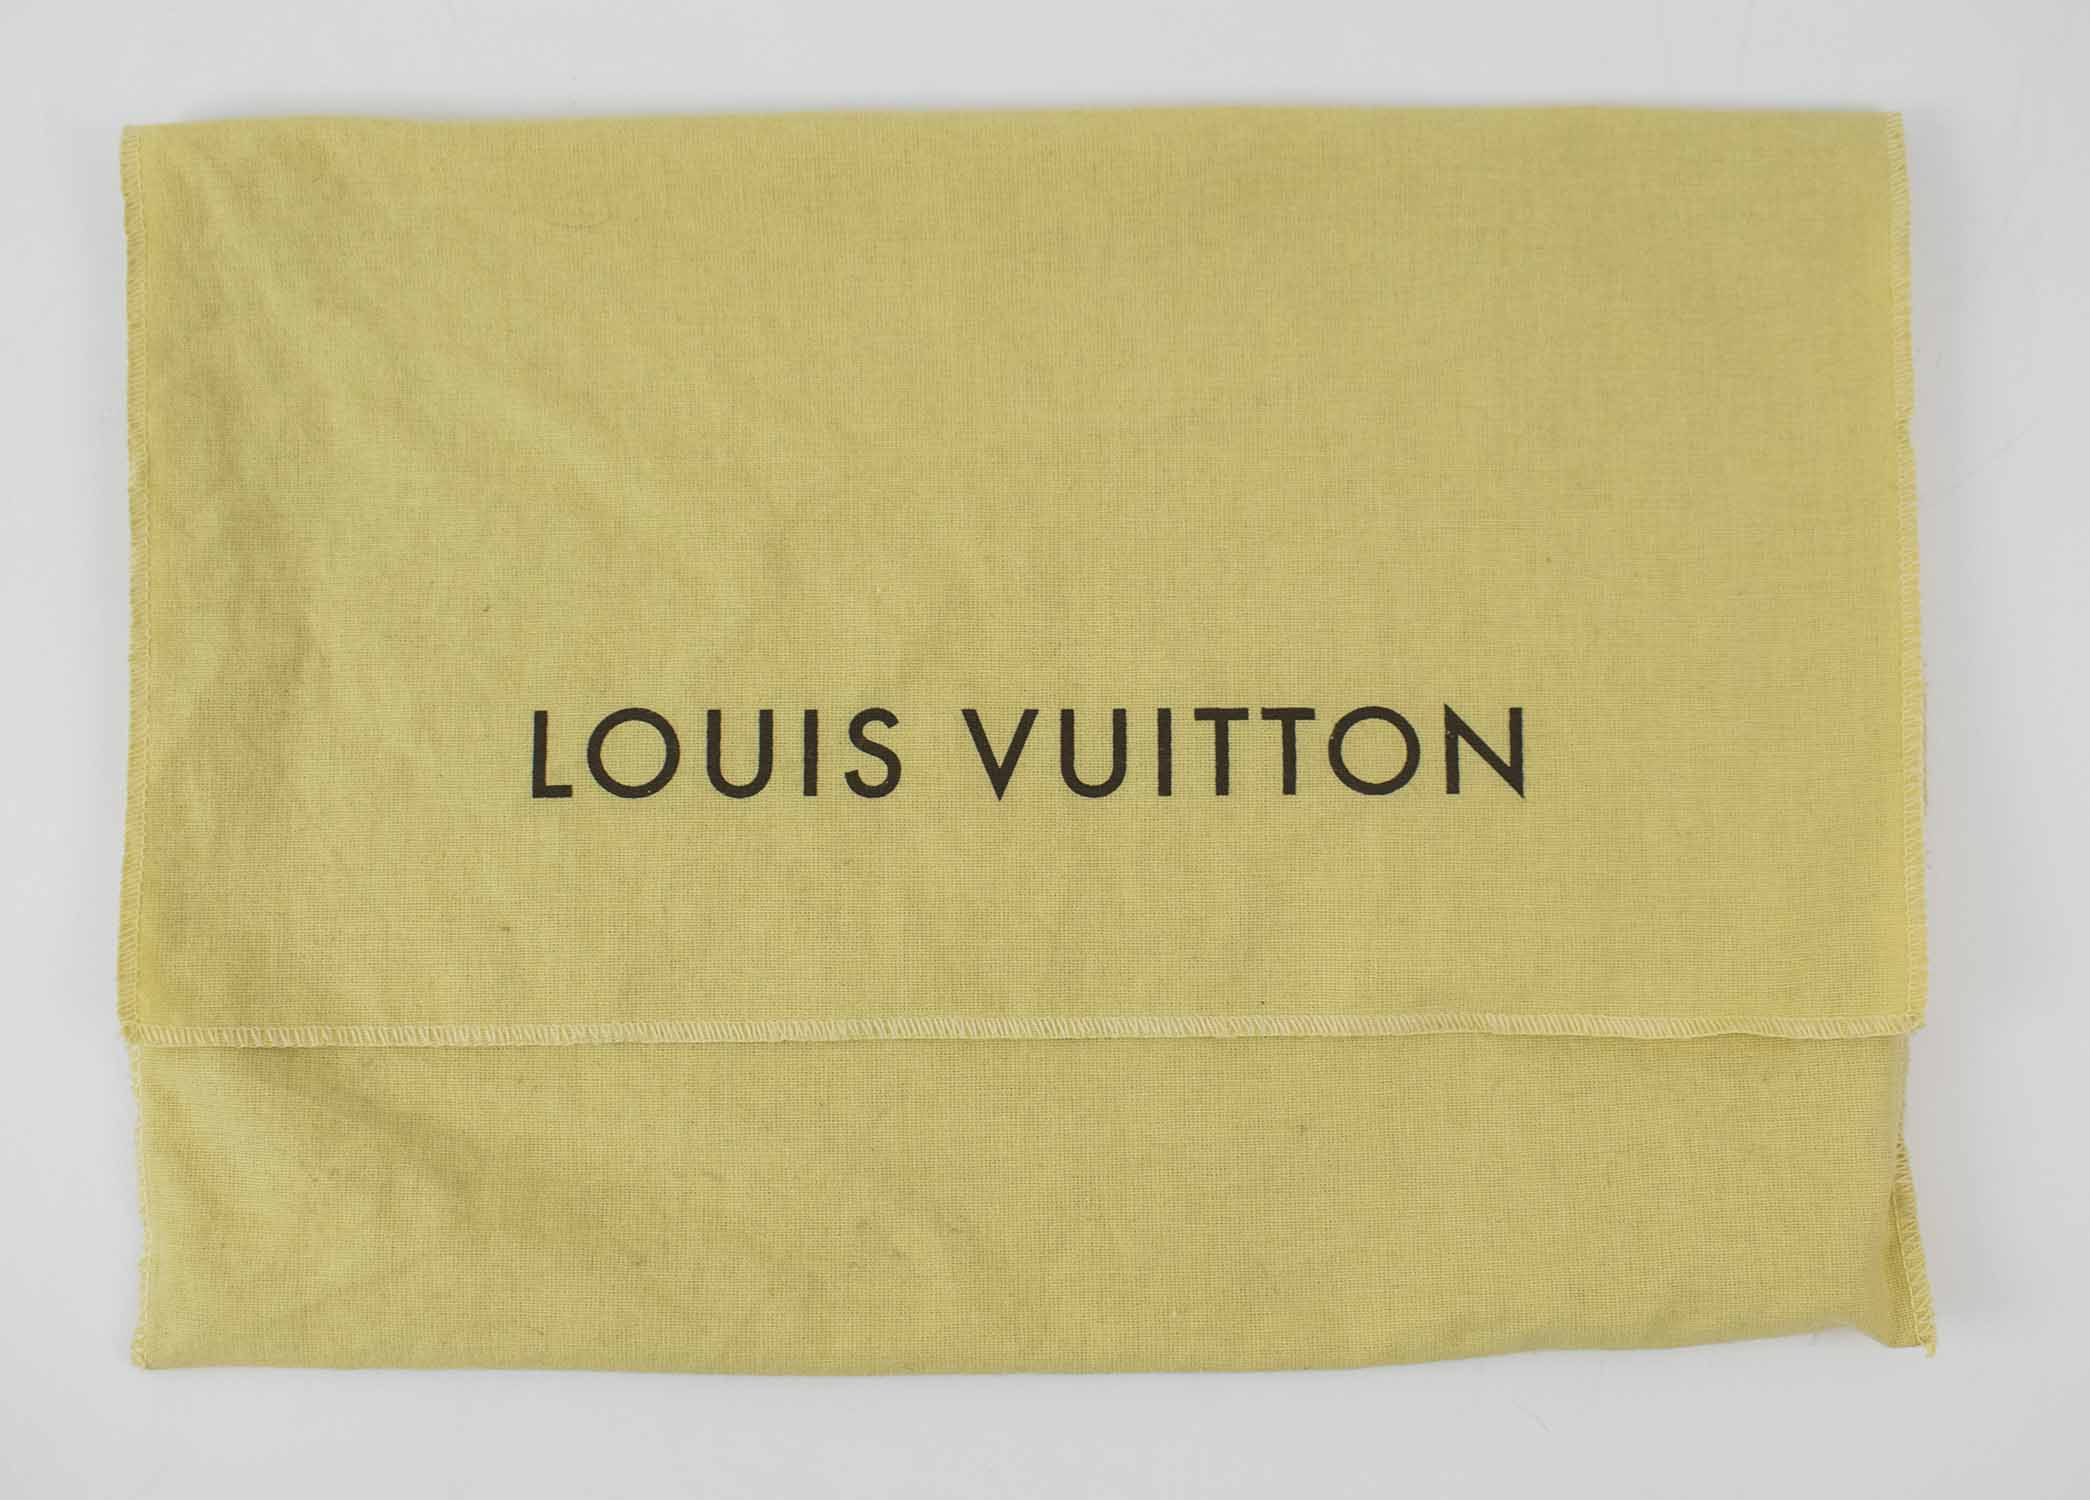 LOUIS VUITTON GRACE BOBBY SHOULDER RECTANGULAR MONOGRAM BAG, dark brown  leather with adjustable padded shoulder strap, top zip pocket, front  pocket, with black fabric lining, with dust bag, 19cm x 28cm H.